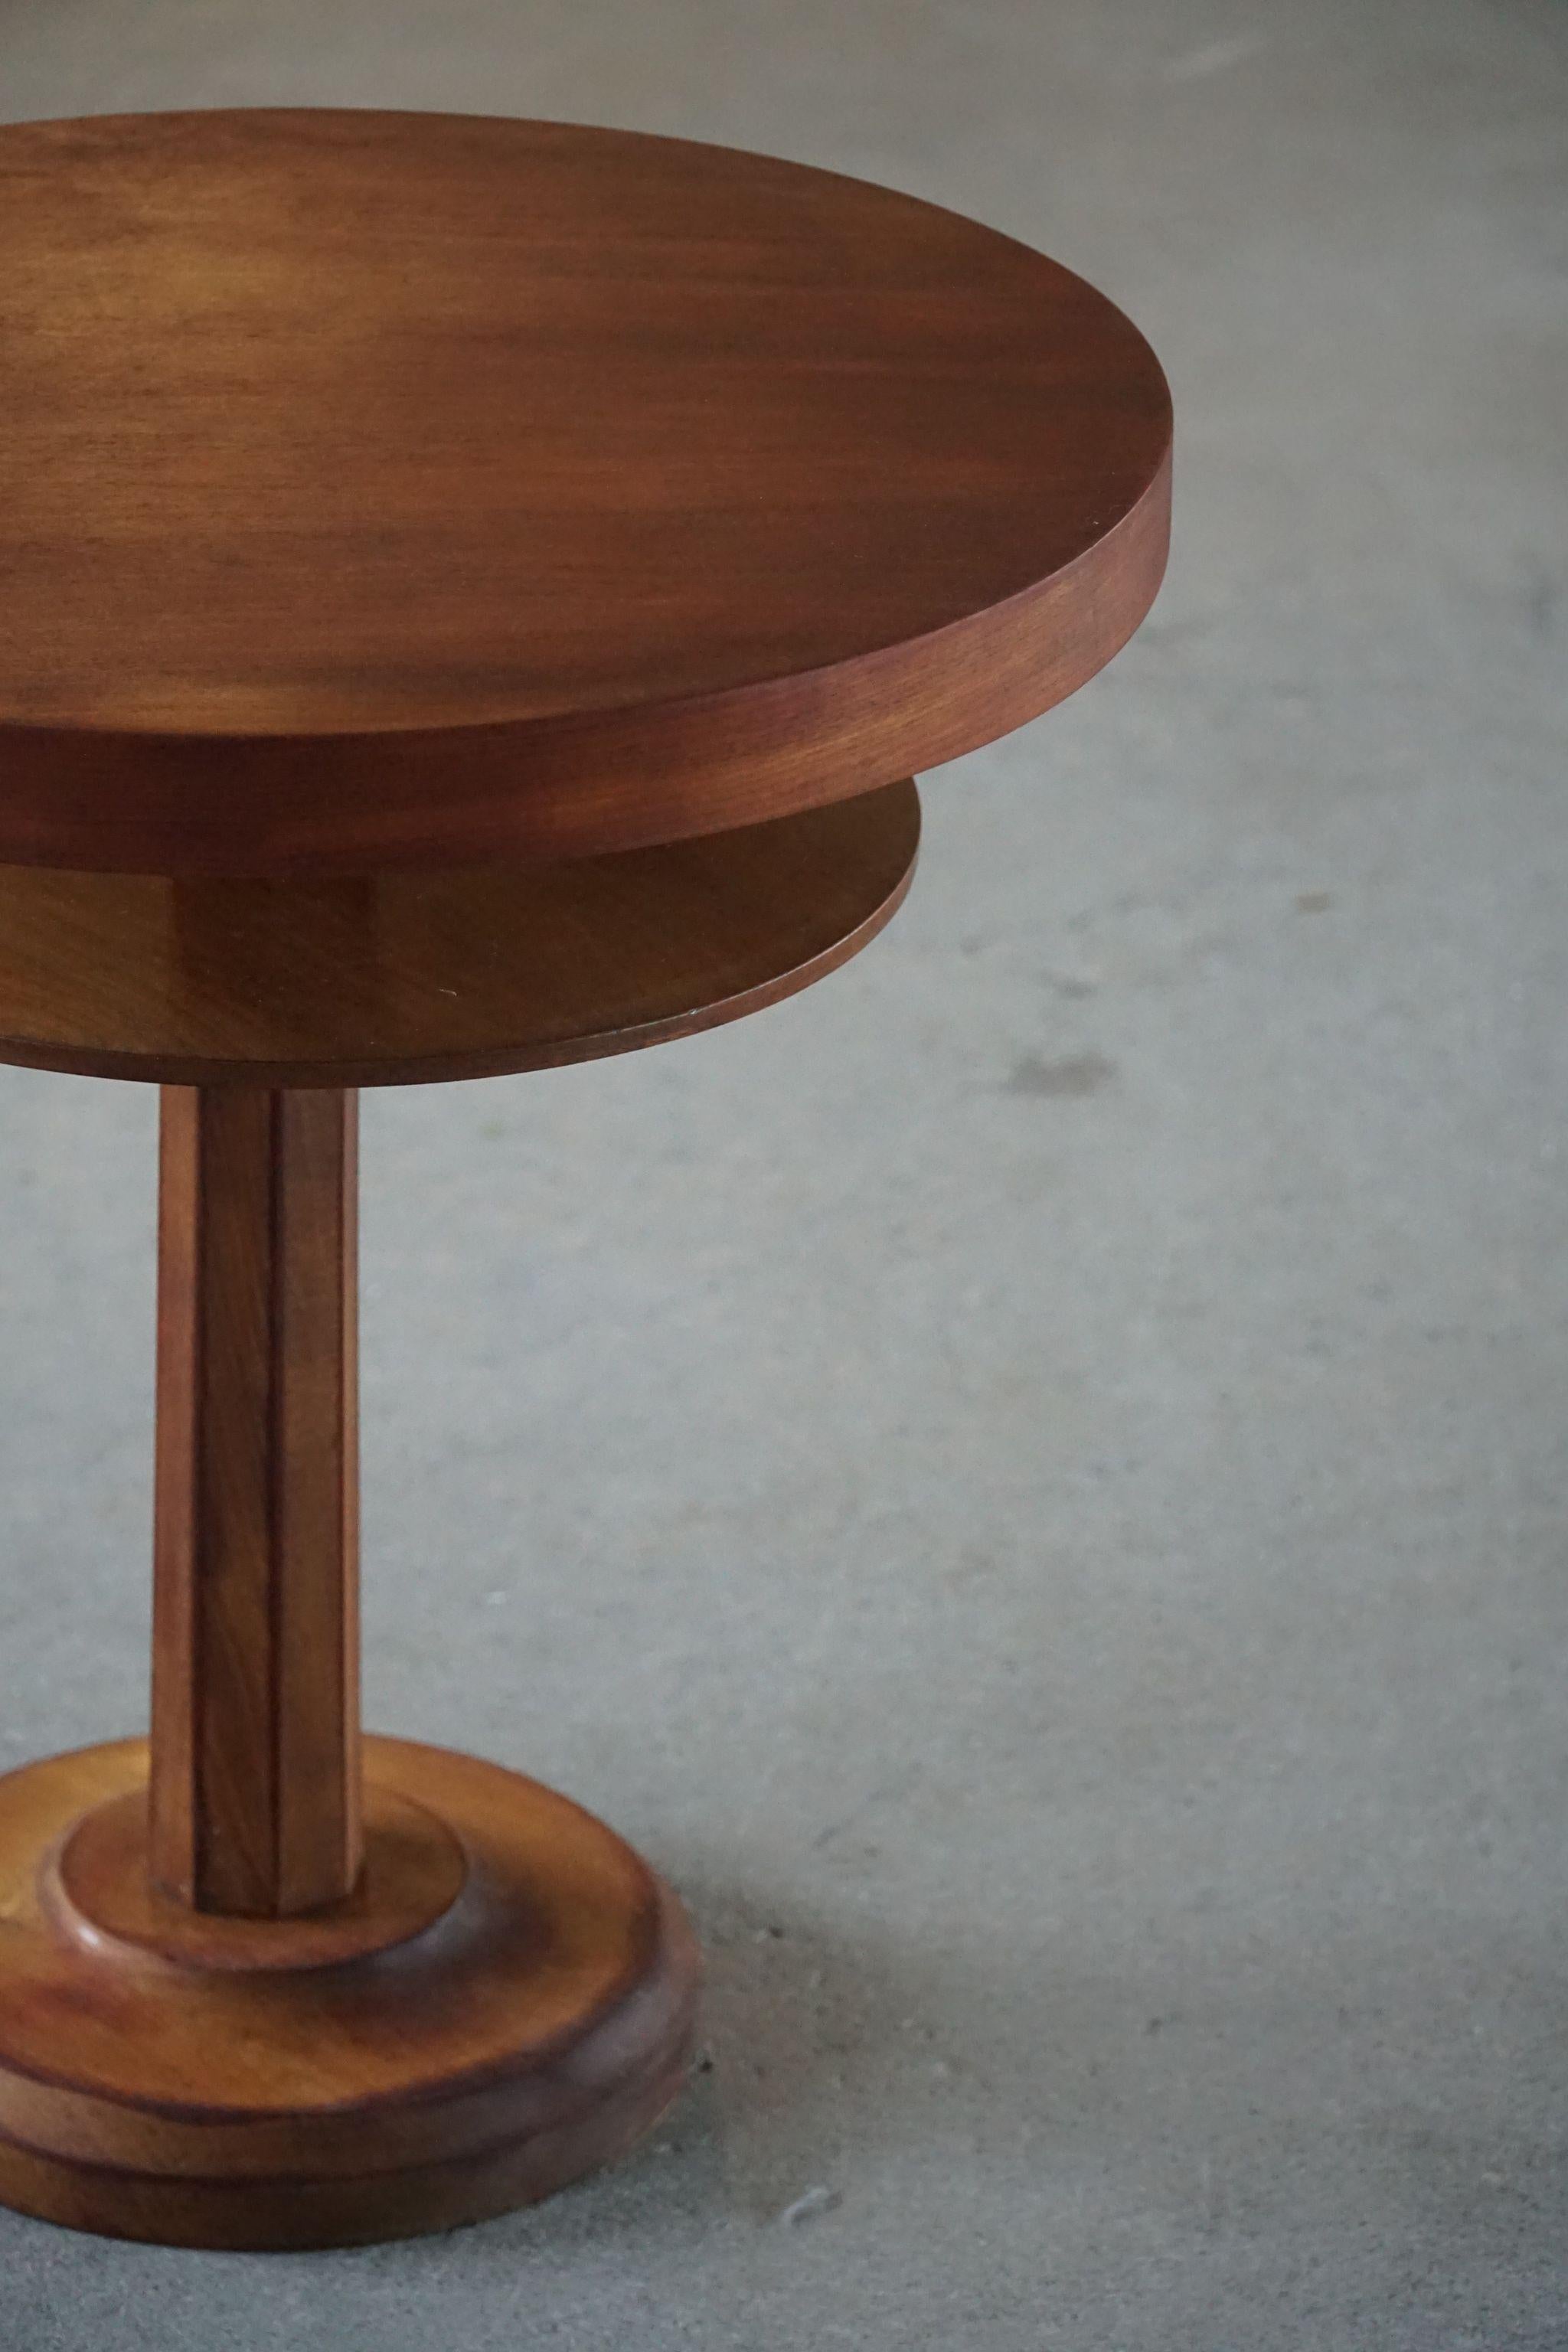 Scandinavian Modern Danish Round Art Deco Side Table / Coffee Table in Teak, Made in 1940s